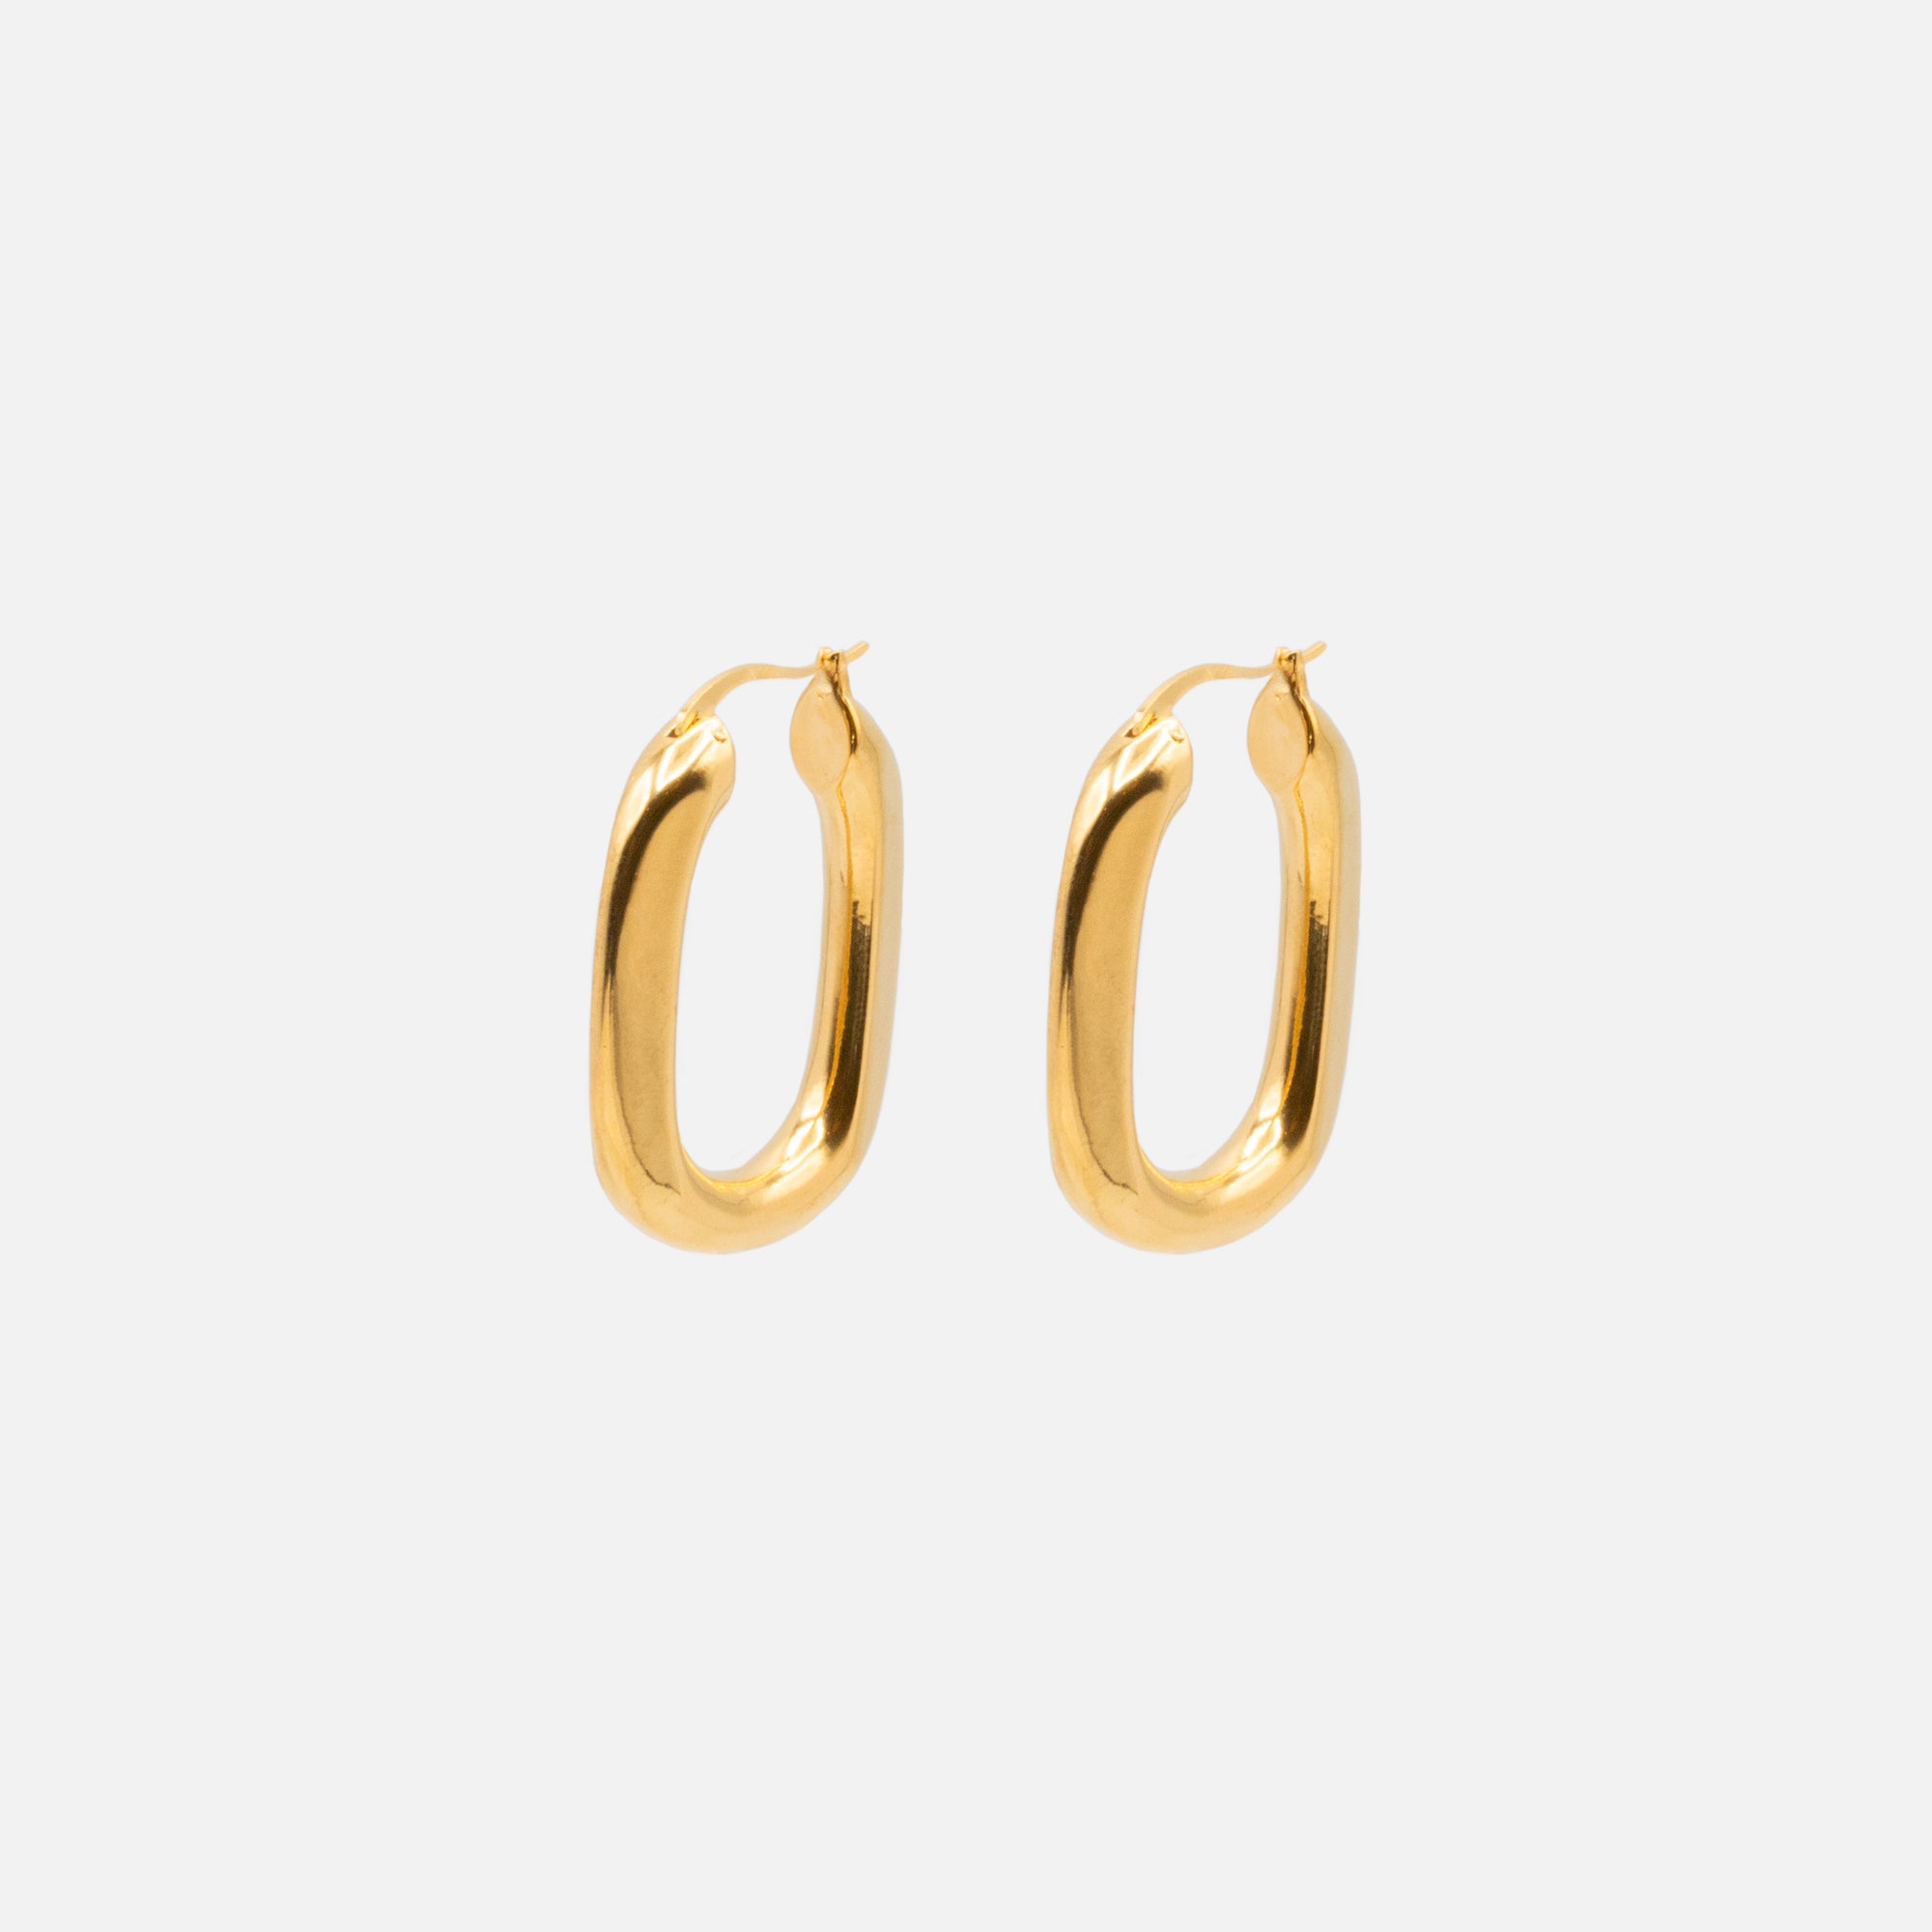 Gold oval stainless steel earrings